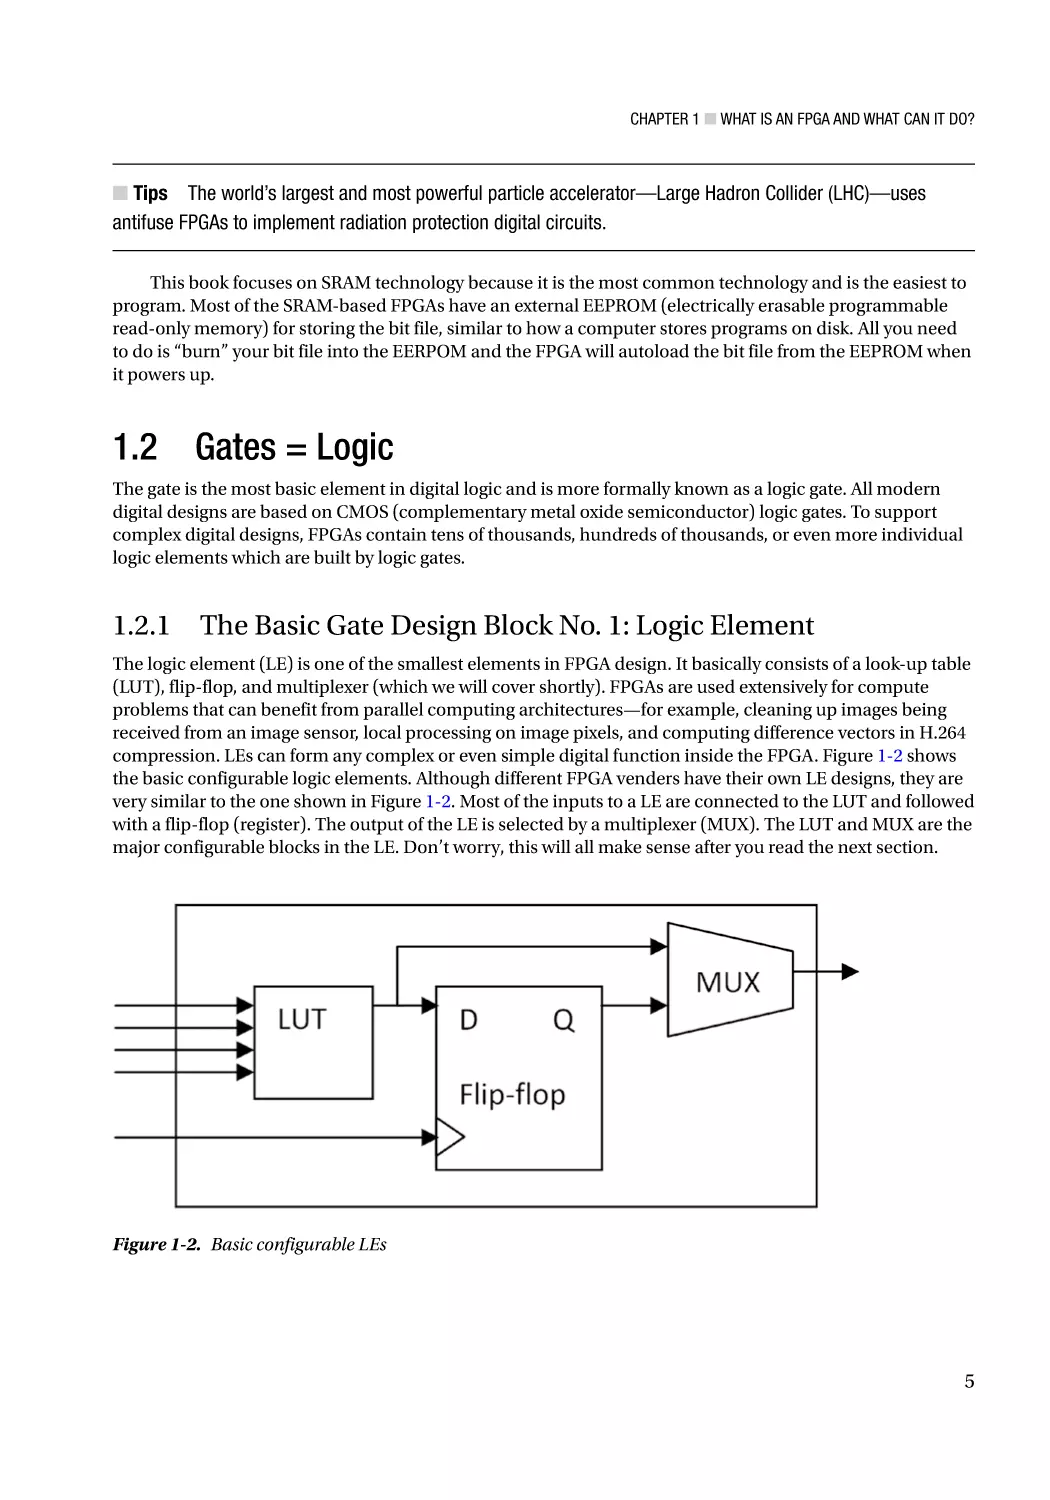 1.2 Gates = Logic
1.2.1 The Basic Gate Design Block No. 1